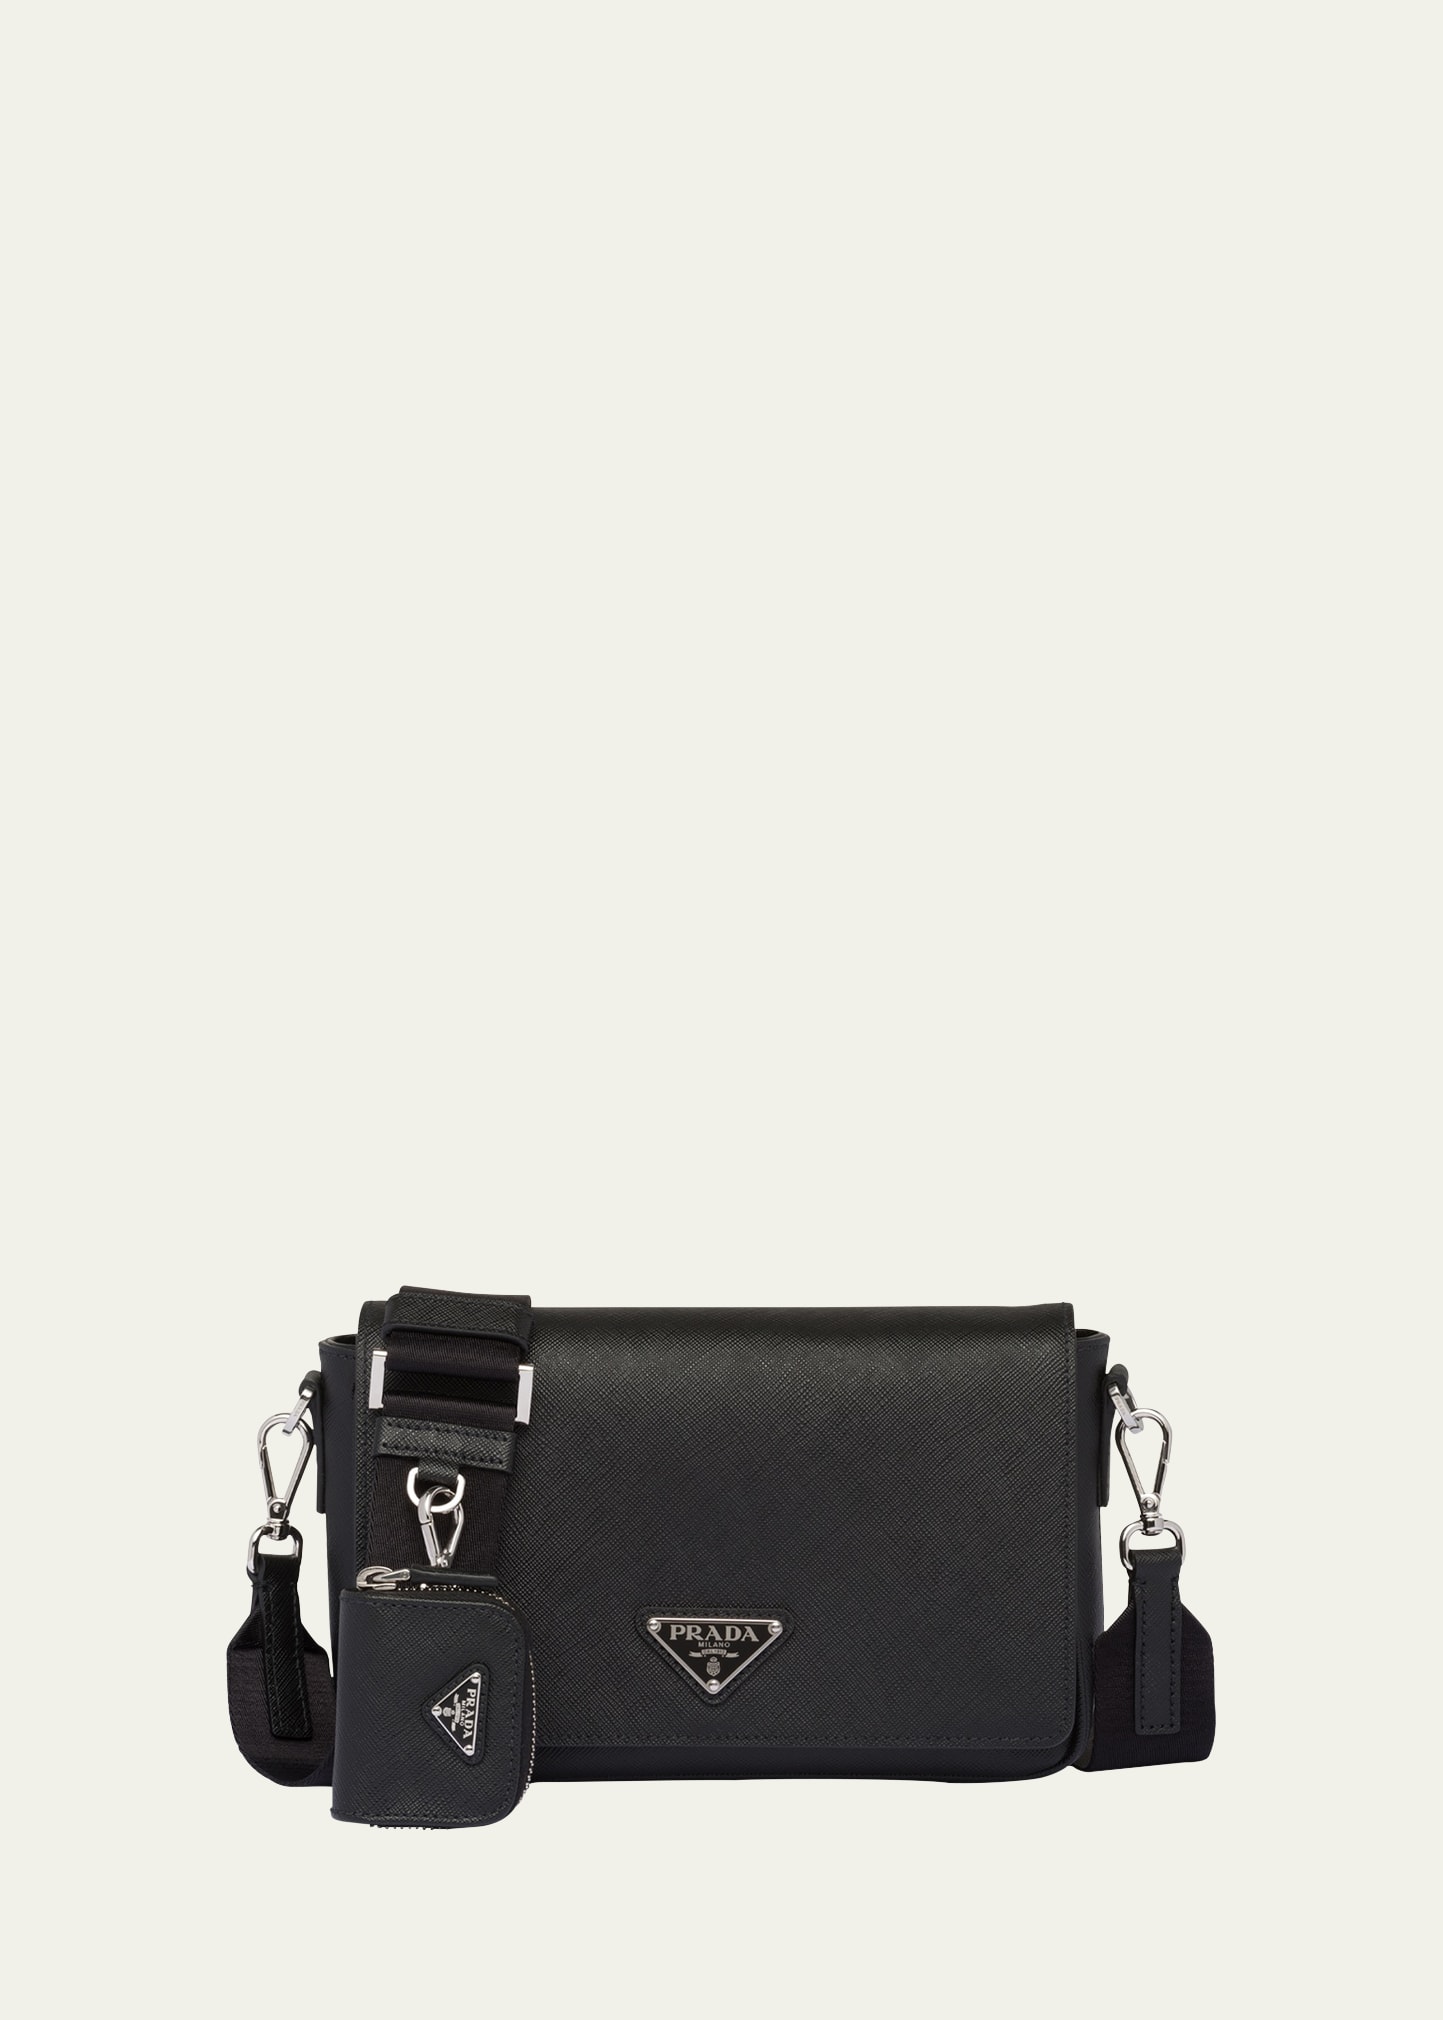 Prada Man Black Leather And Nylon Crossbody Bag 